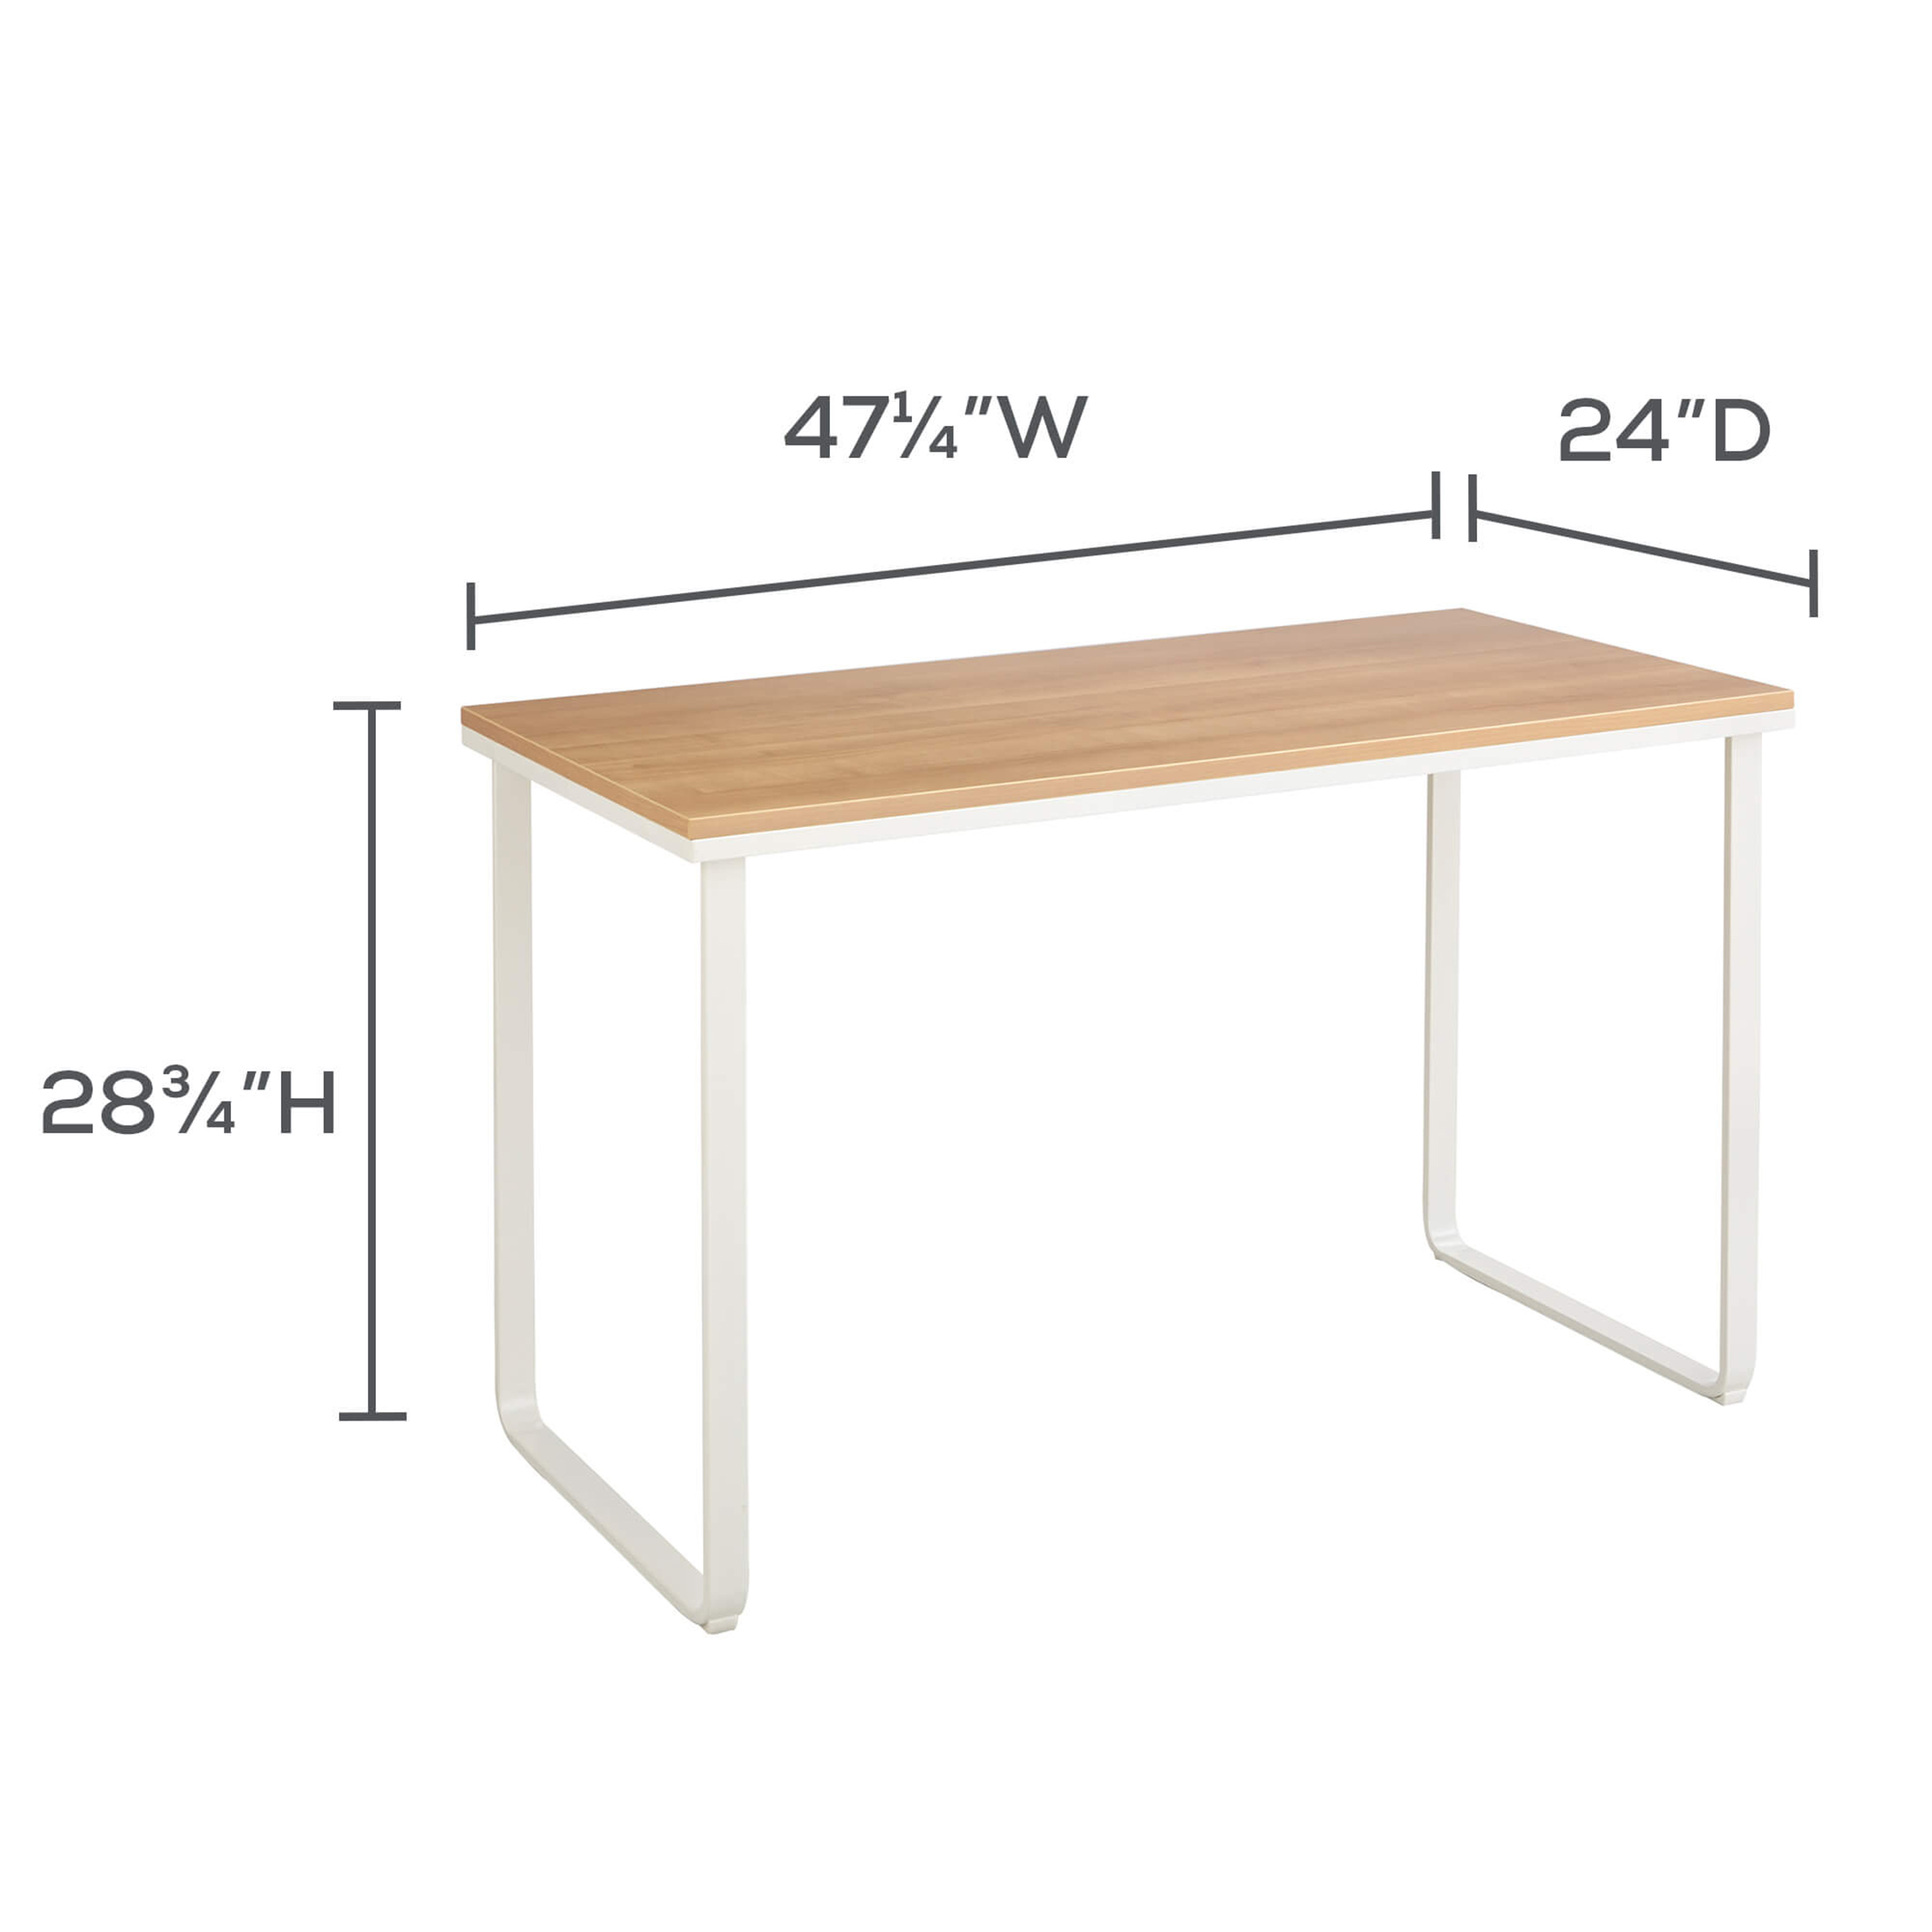 Small home office desk dimensions